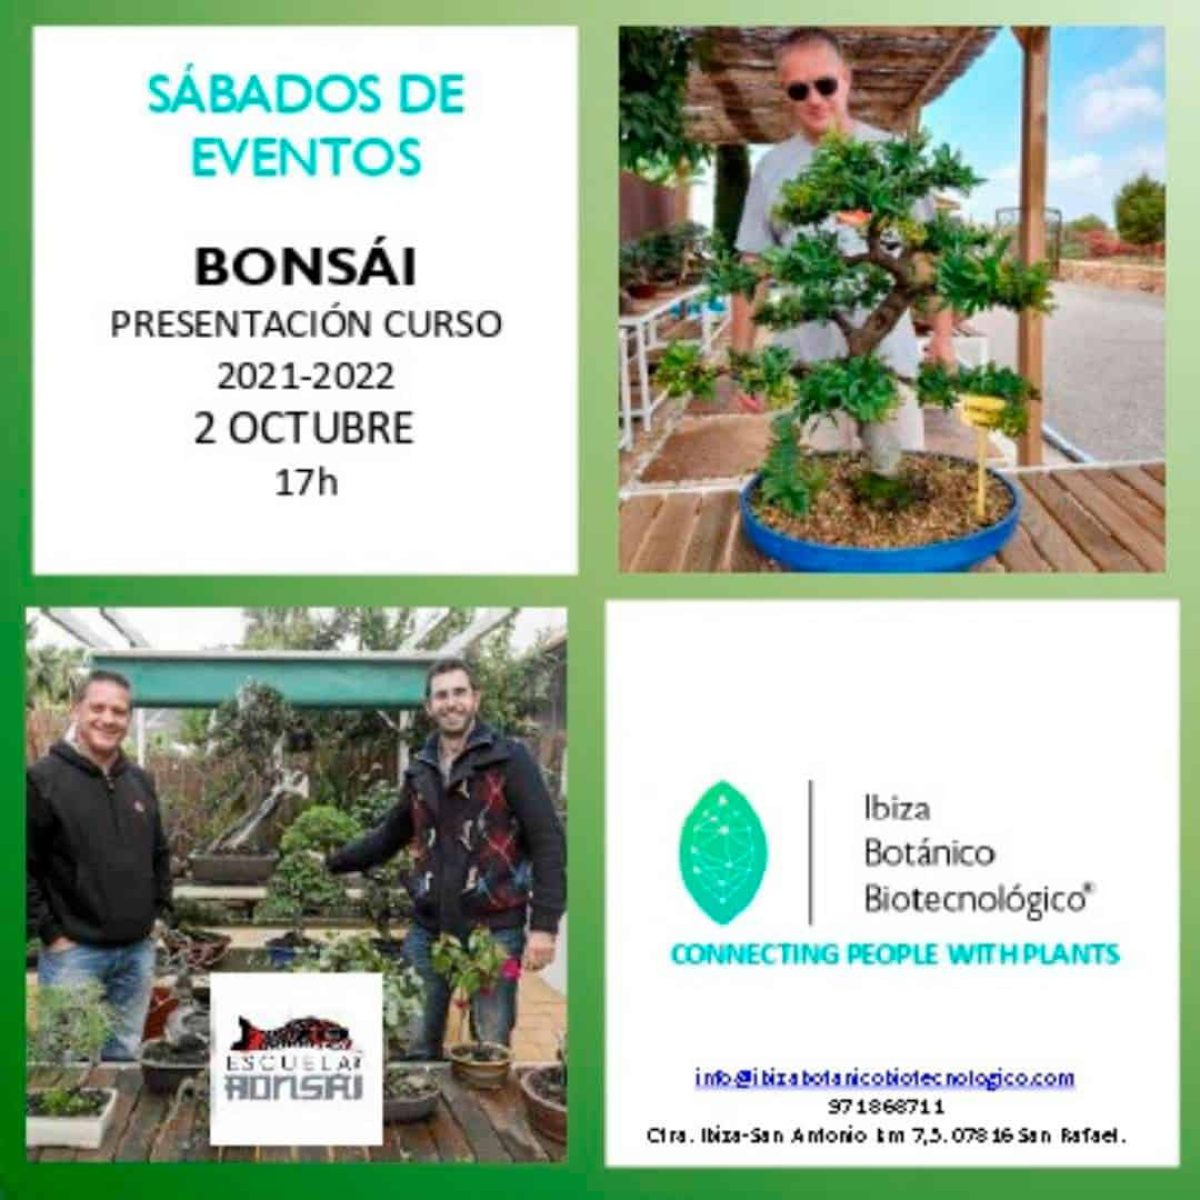 presentazione-corso-bonsai-ibiza-botanical-biotechnology-2021-welcometoibiza